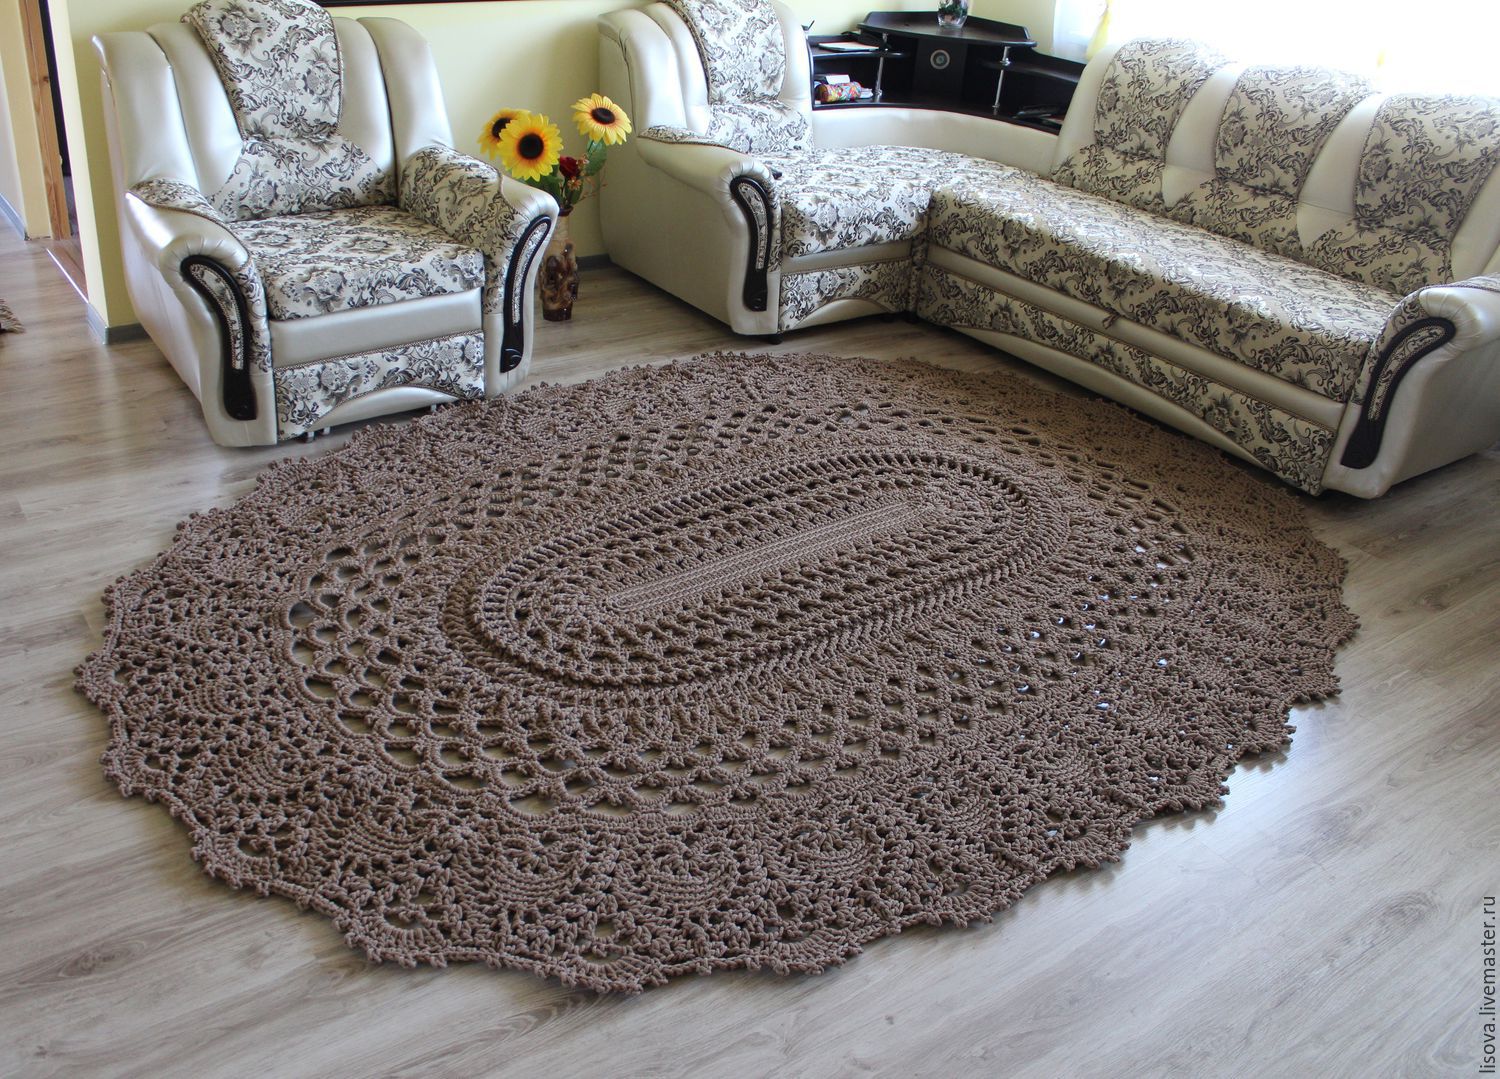 Free Crochet Pattern for a Large Oval Rug ⋆ Crochet Kingdom